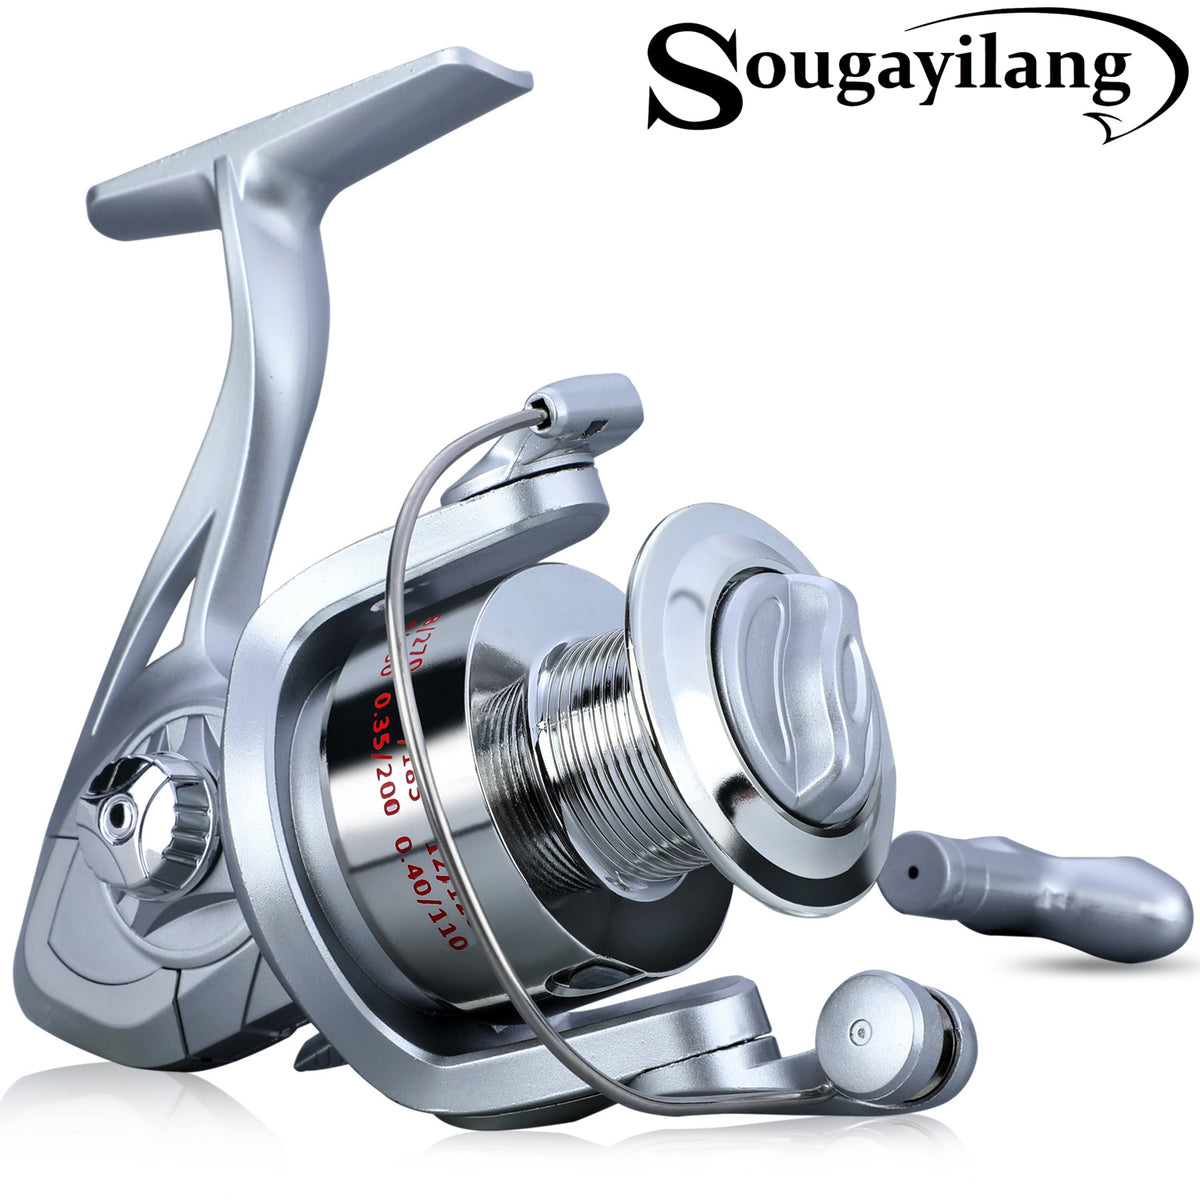 Sougayilang 5.0:1 Spinning Fishing Reel Wooden Handle 1000-3000 Series 12BB  Spinning Reel River Lake Fishing Reel Fishing Tackle